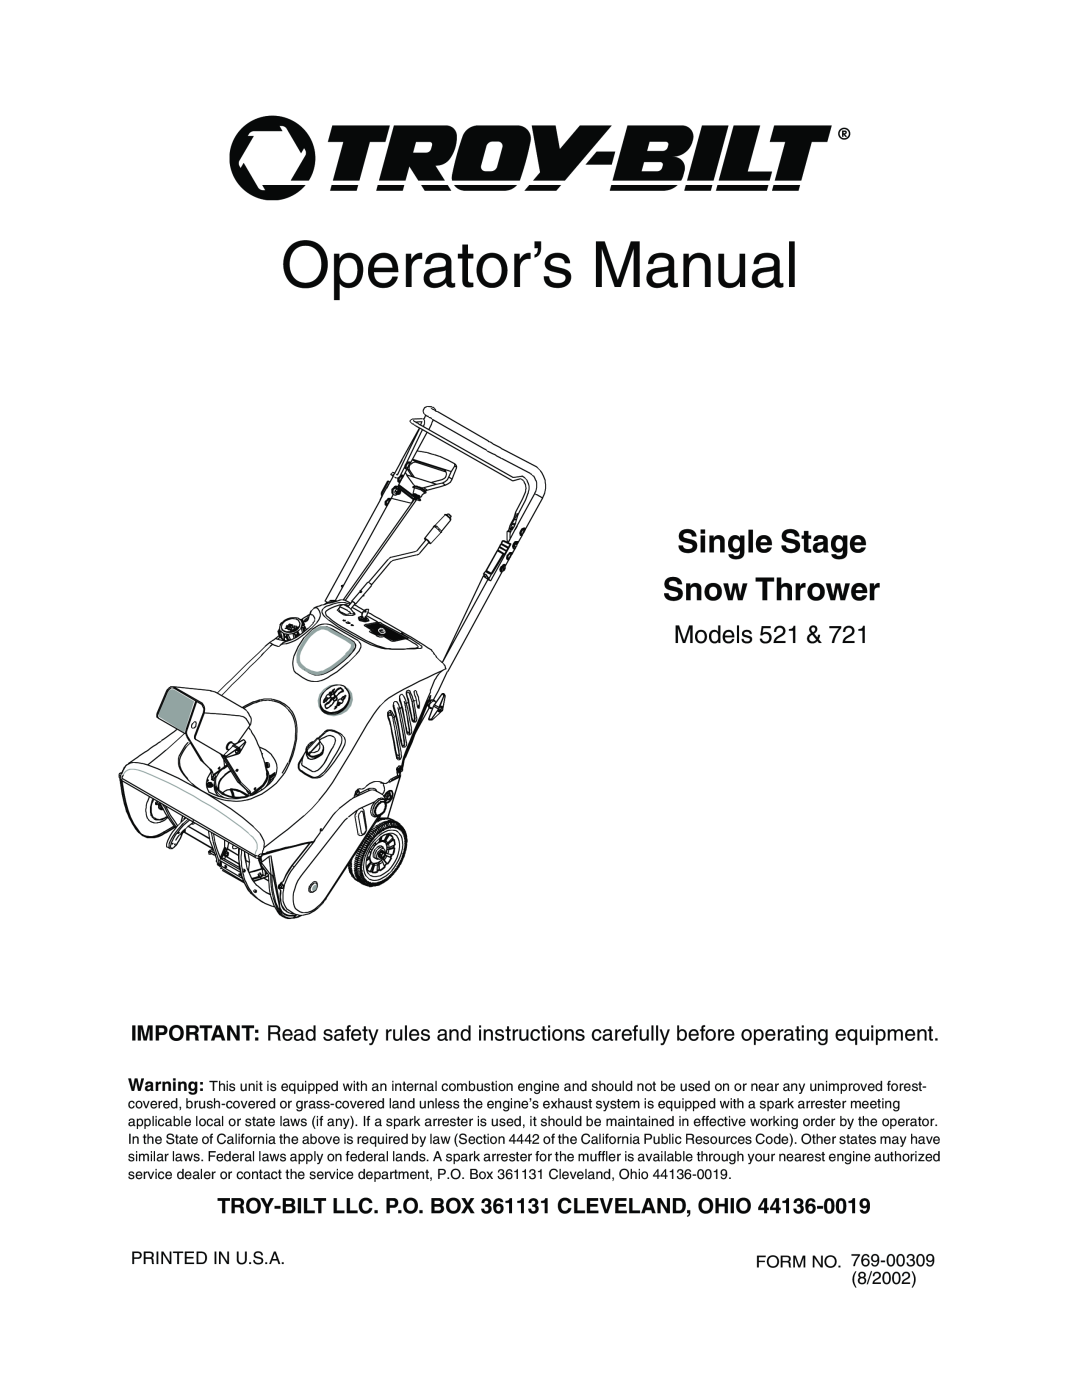 Troy-Bilt 721 manual Operator’s Manual, Single Stage Snow Thrower, Models, TROY-BILT LLC. P.O. BOX 361131 CLEVELAND, OHIO 